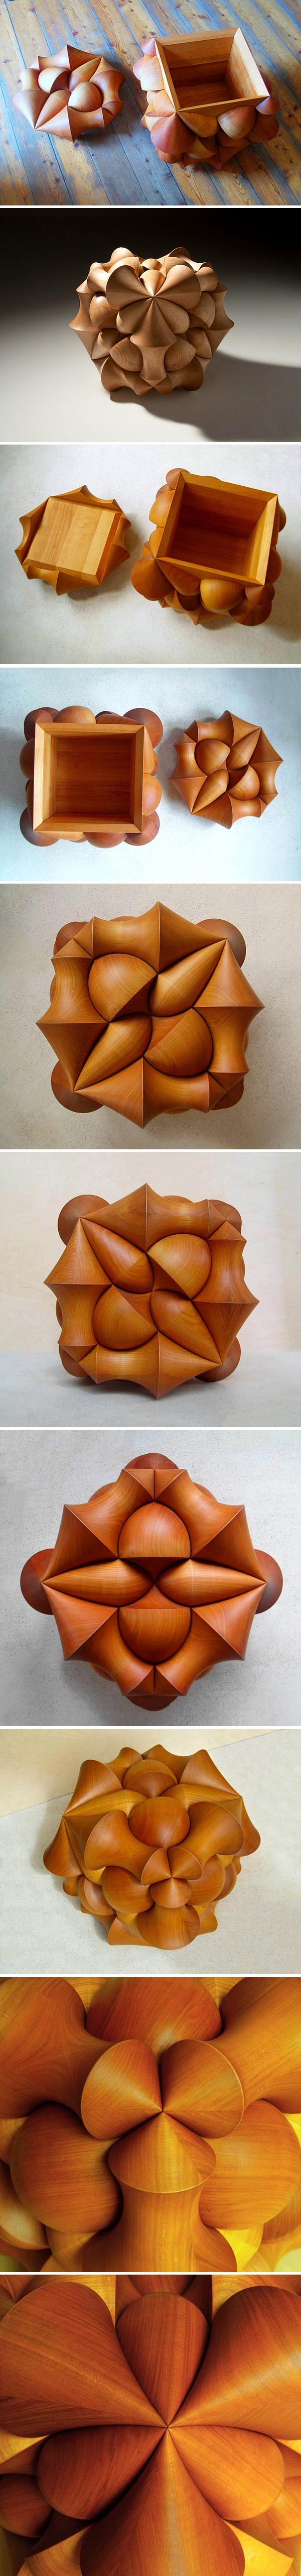 Фантастический куб «Cube Illusion» от Laszlo Tompa